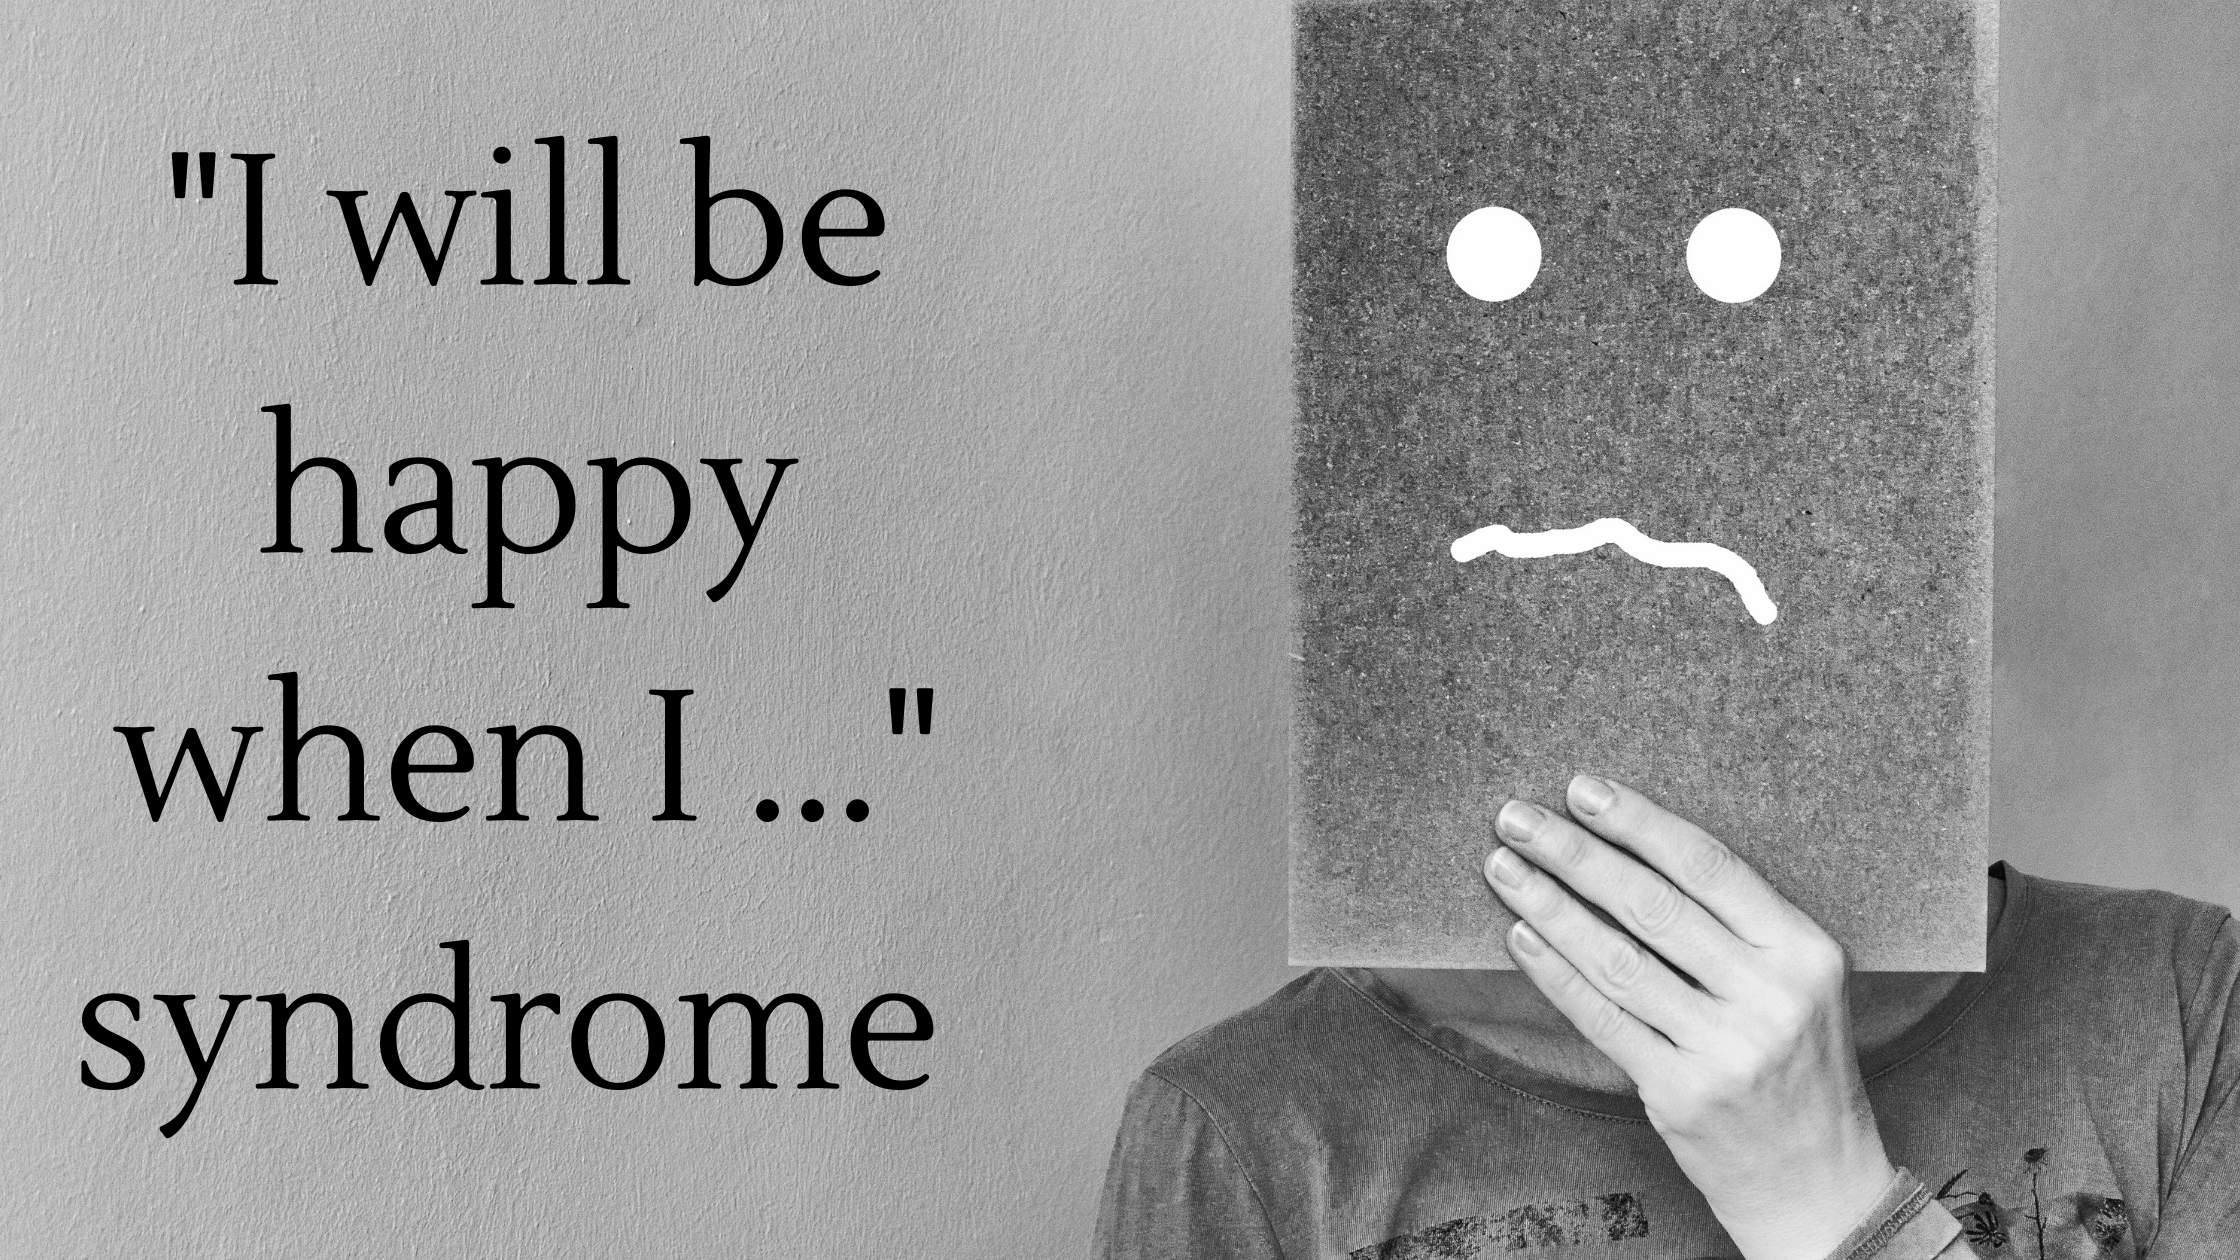 I will be happy when I syndrome